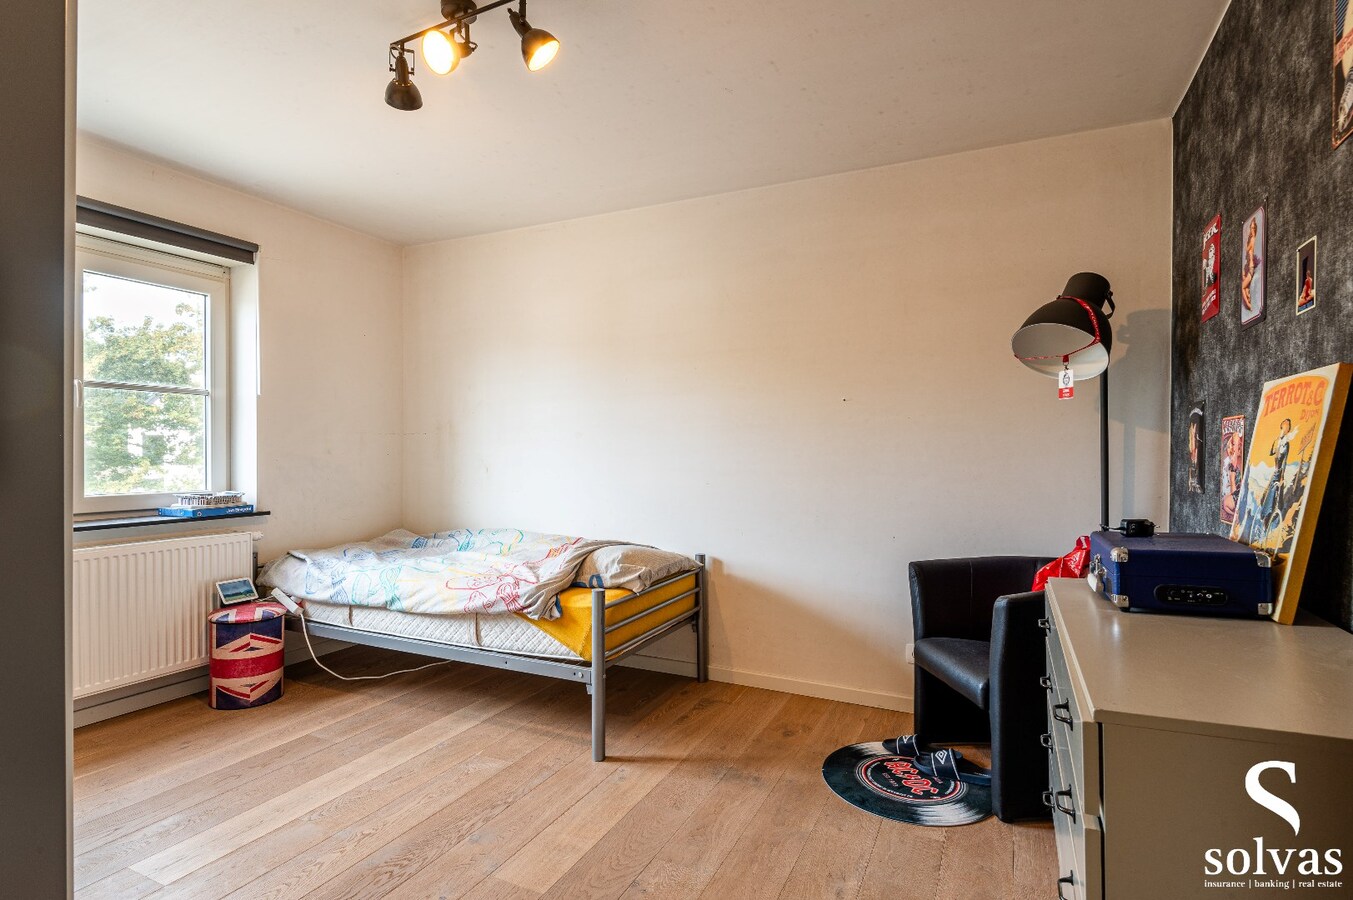 Landelijke woning met 4 slaapkamers in rustige verkaveling 